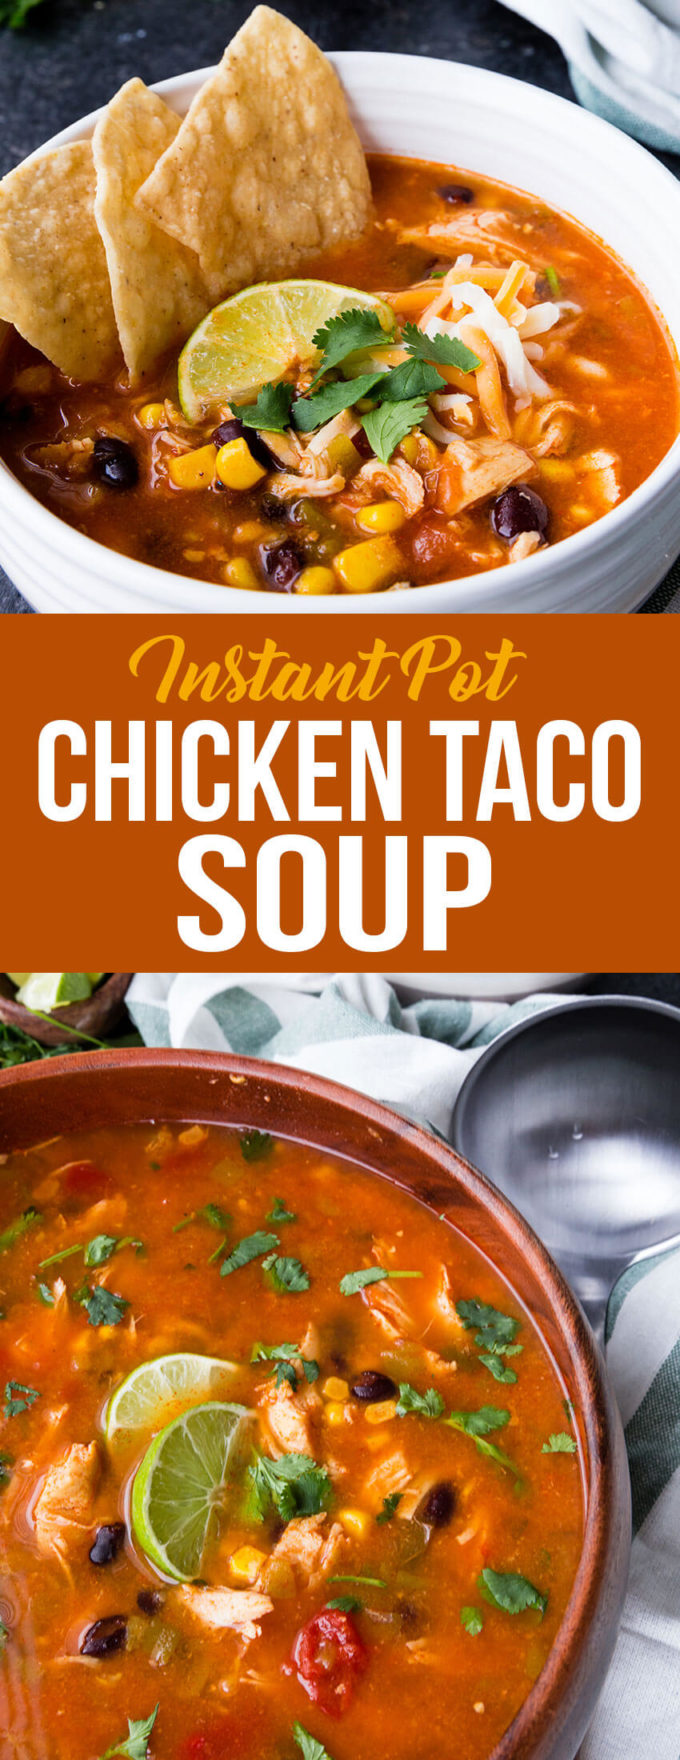 Instant pot chicken taco soup